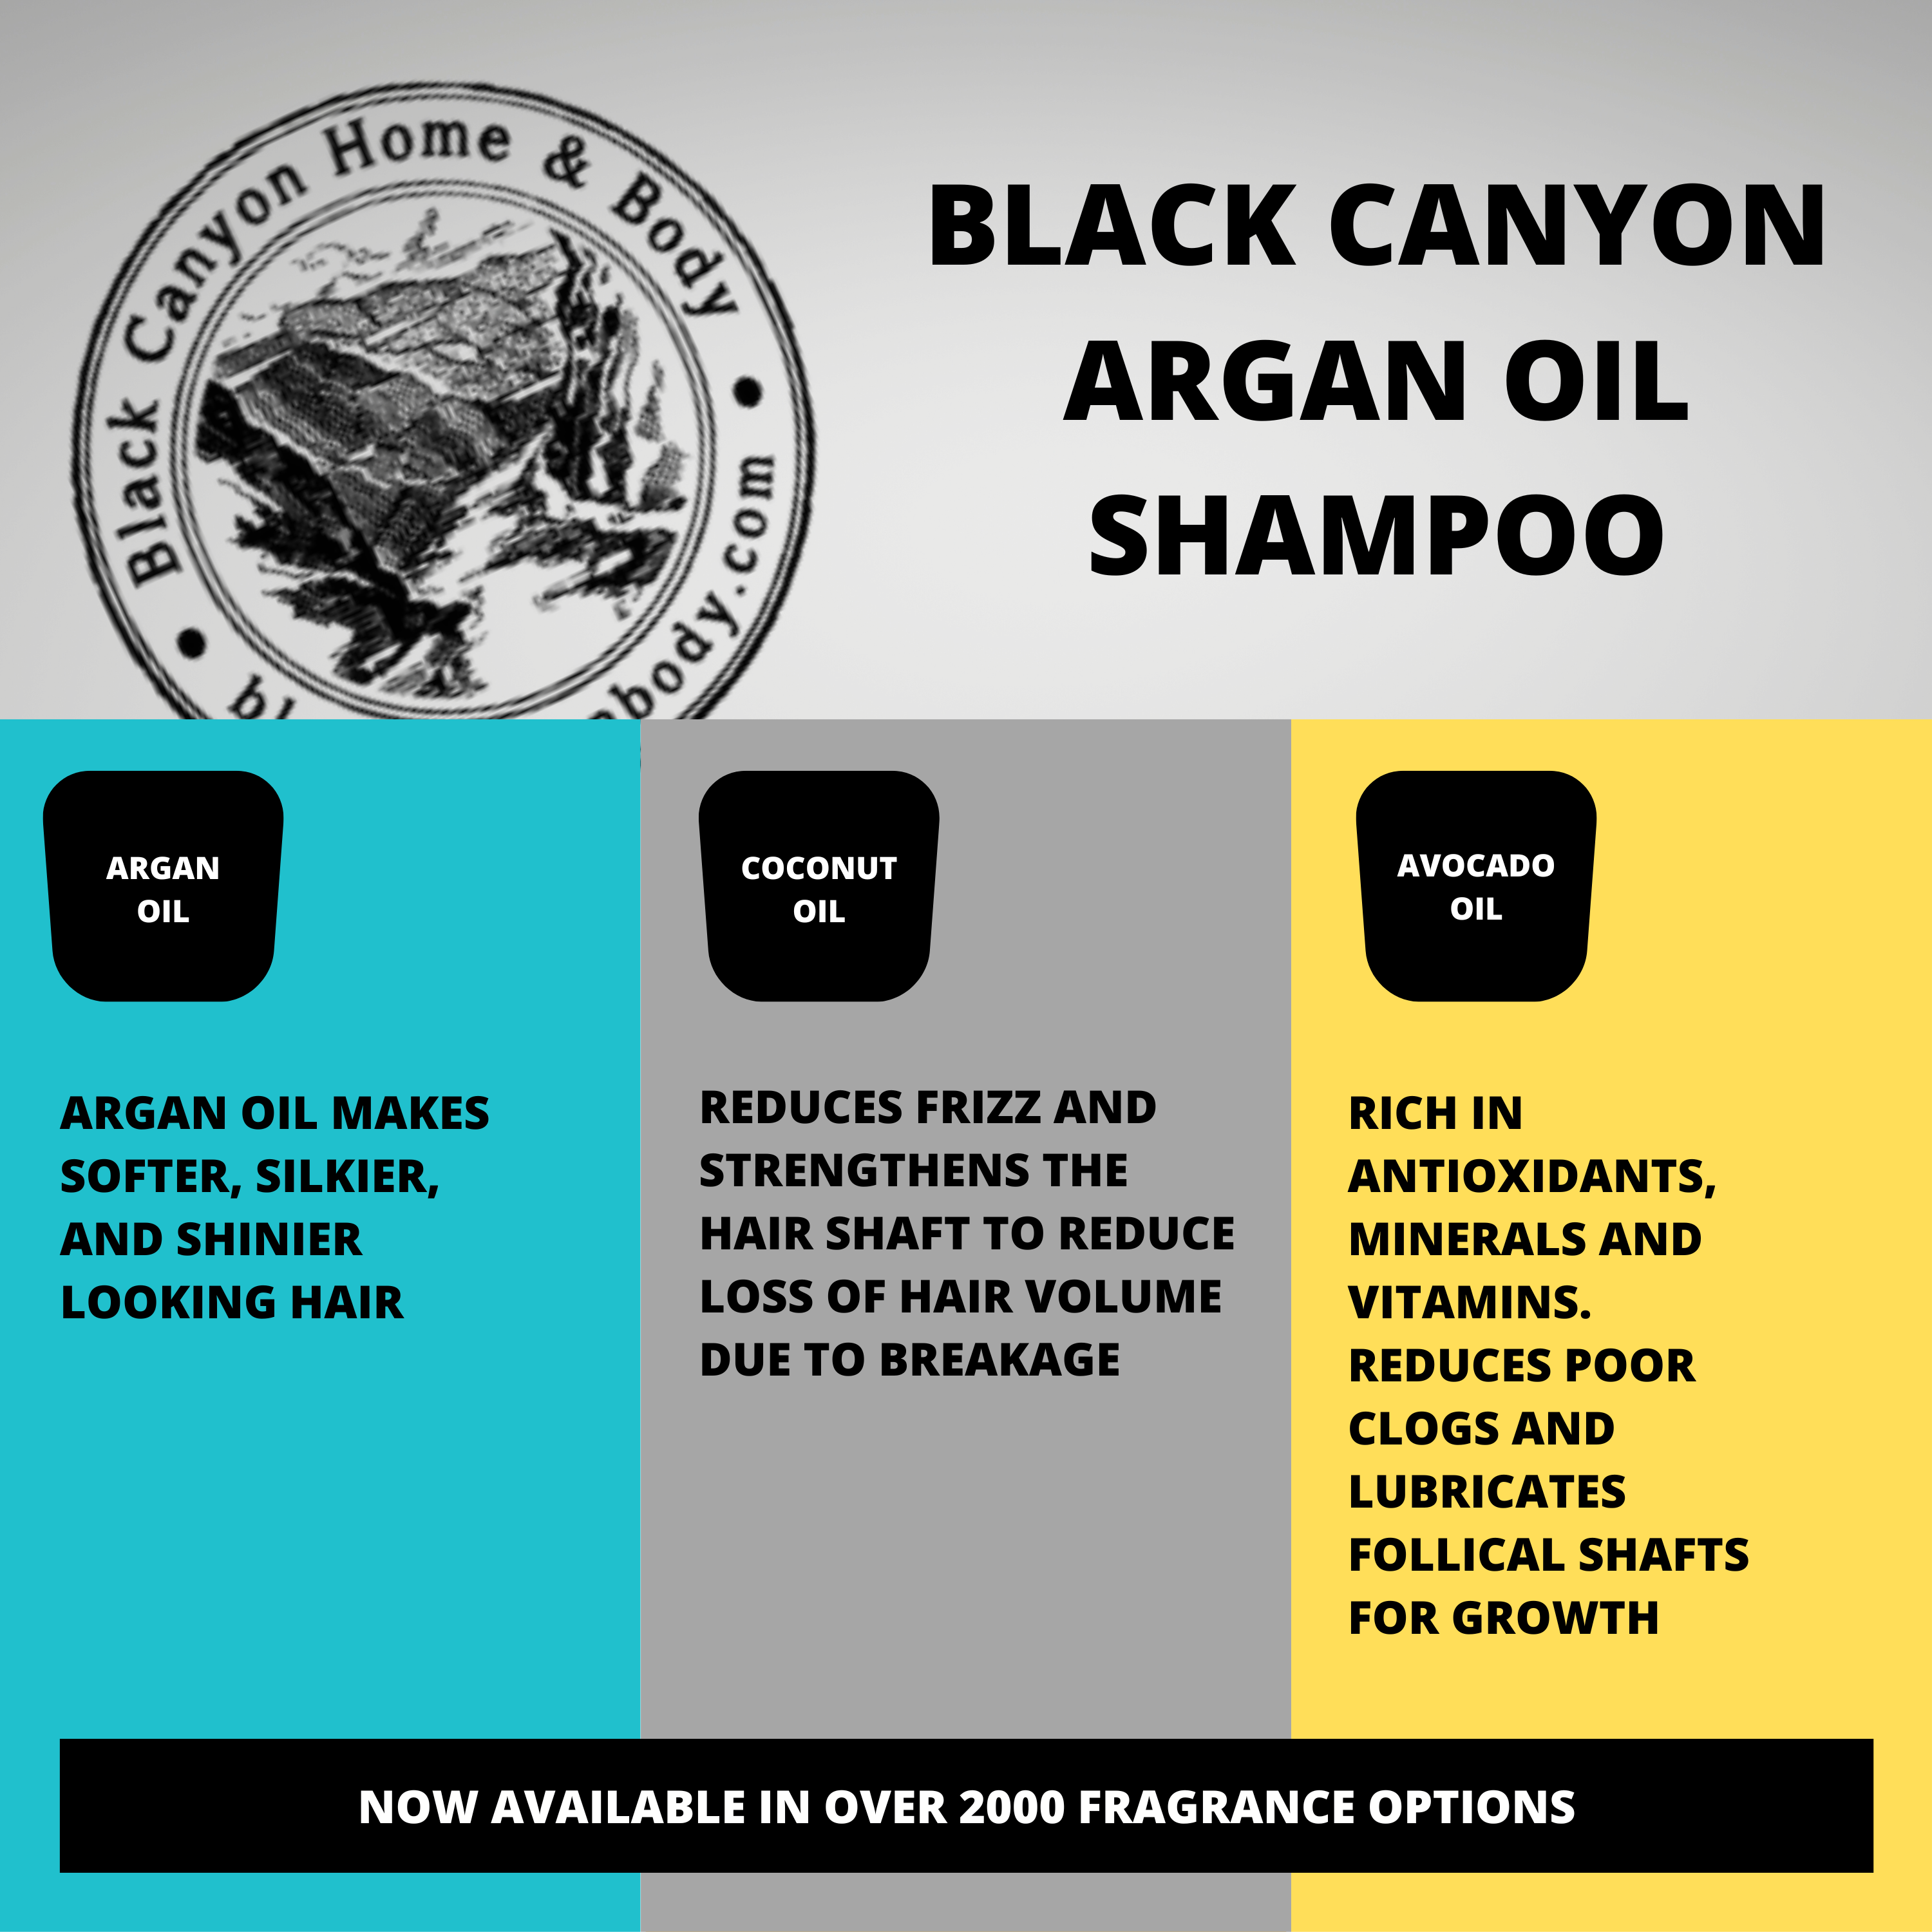 Black Canyon Autumn Spiced Fir Scented Shampoo with Argan Oil